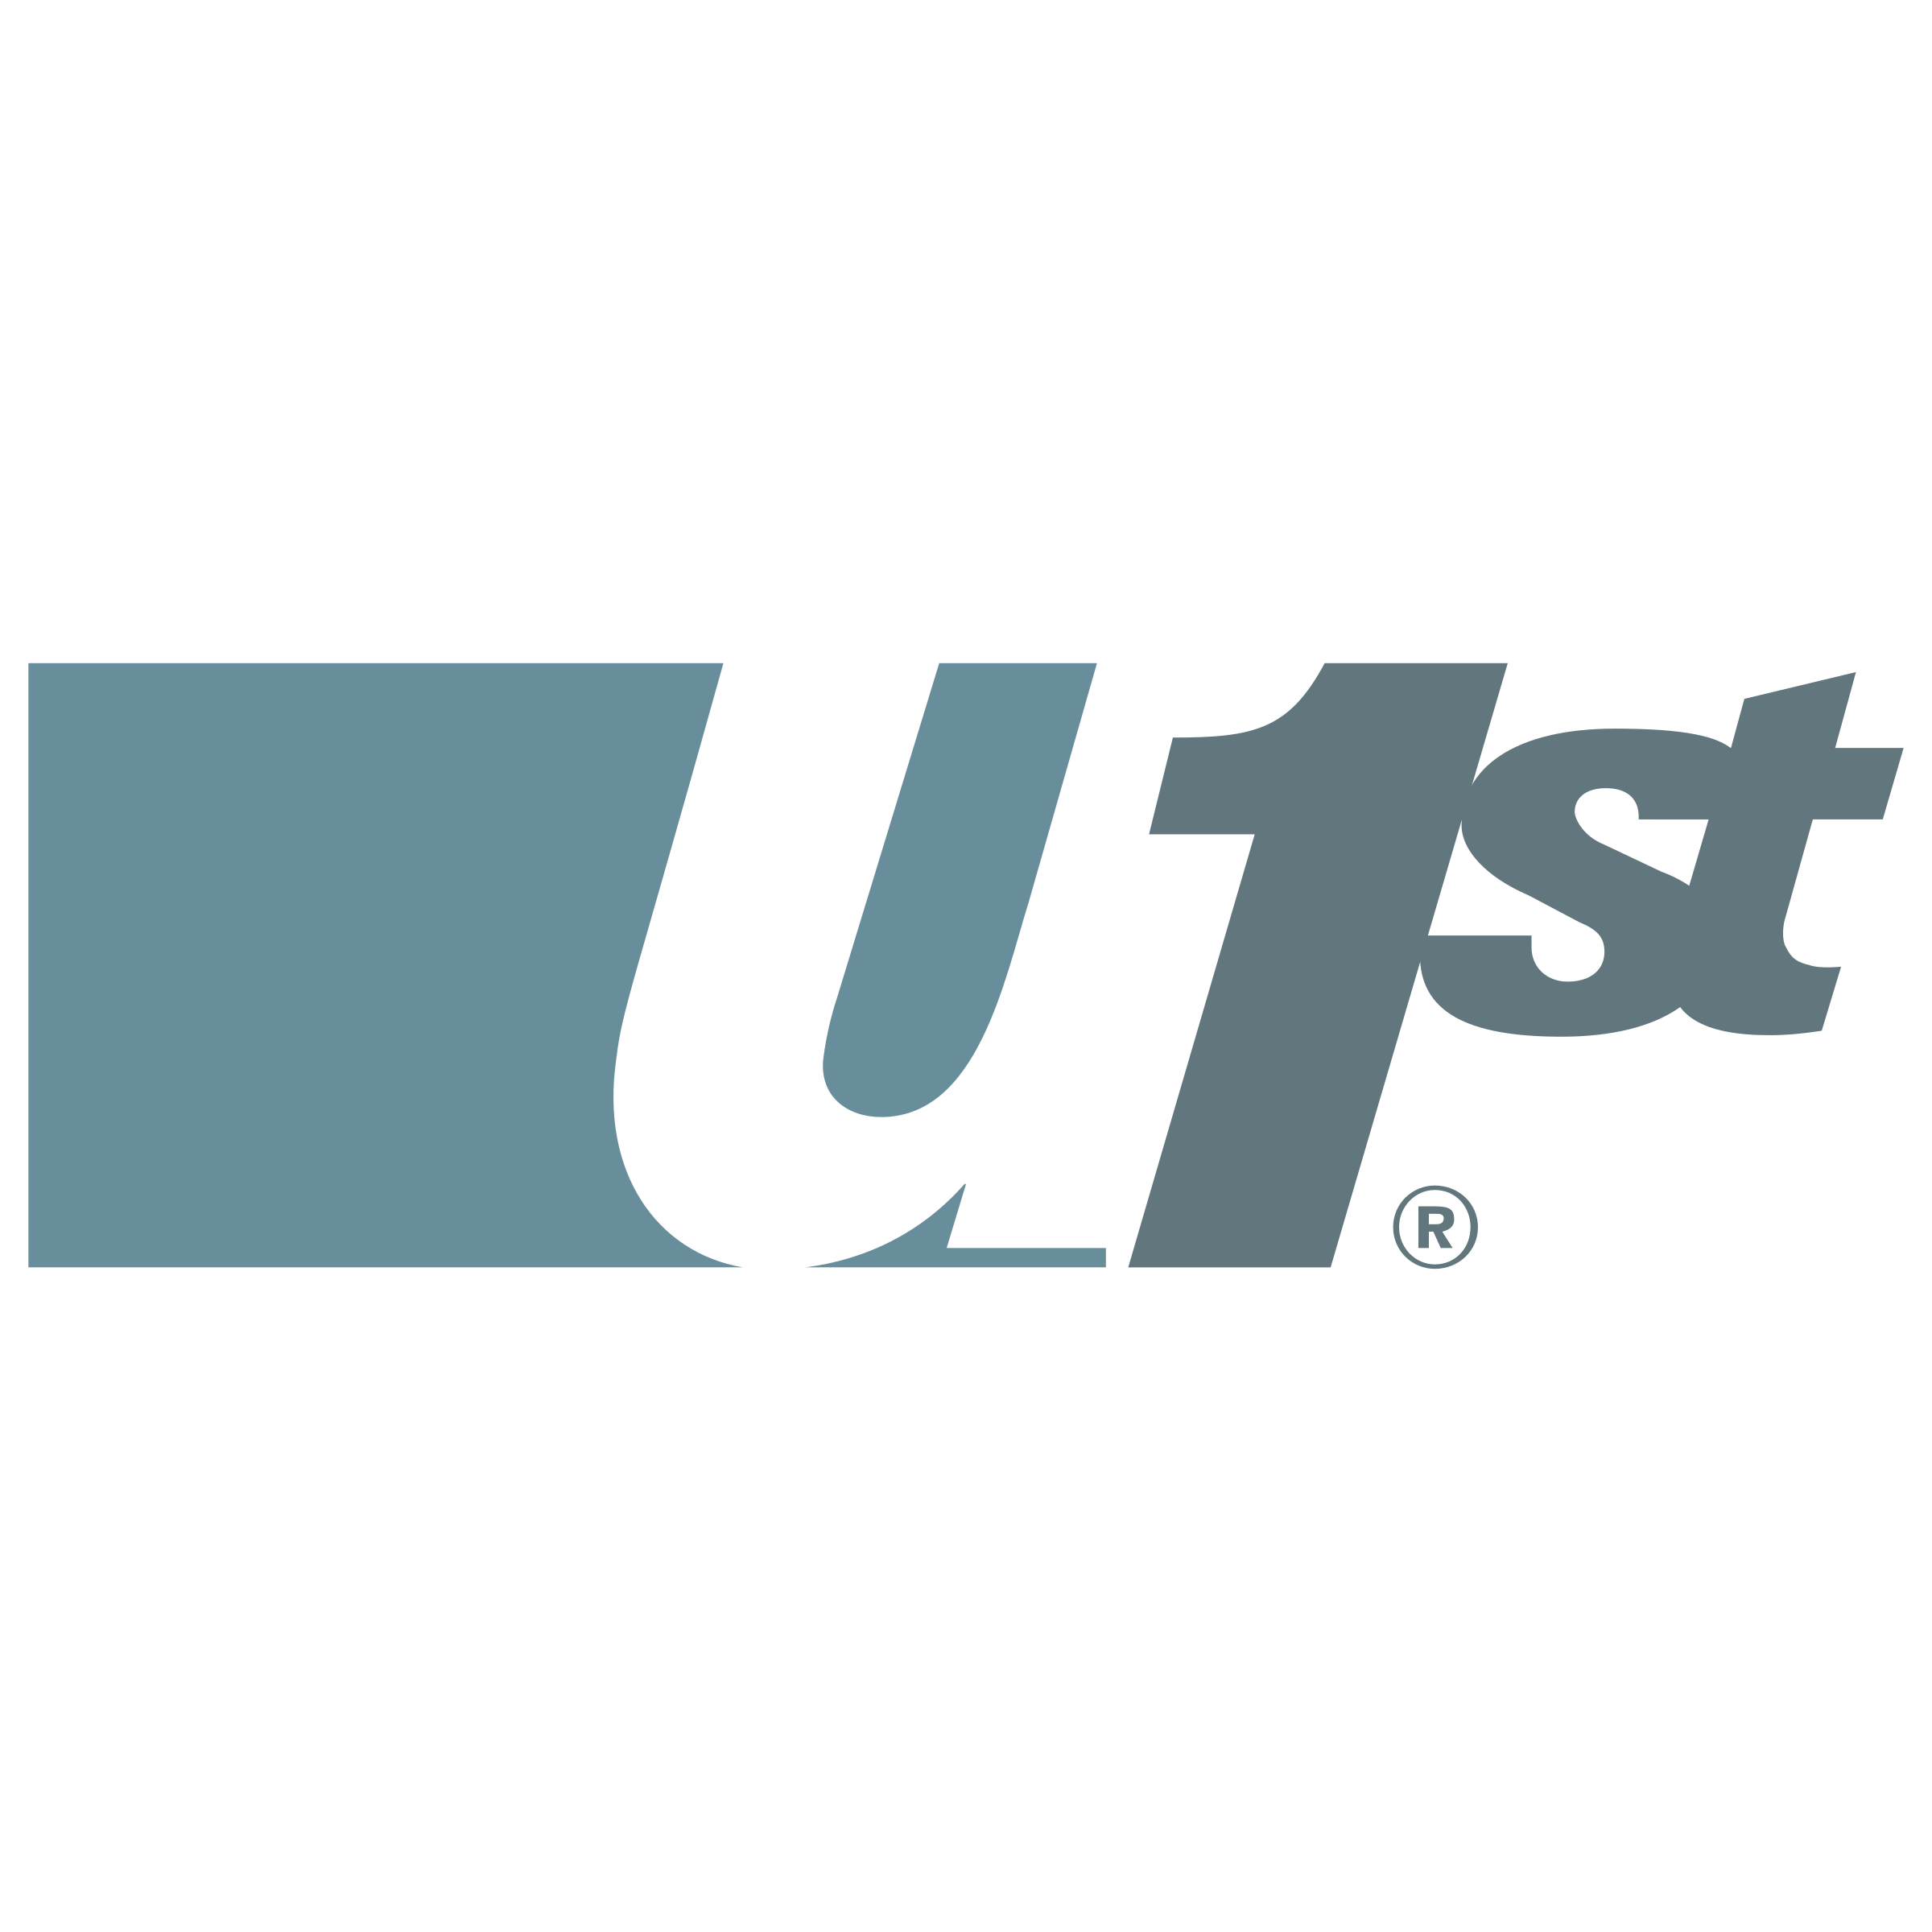 UniFirst Logo - UniFirst Logo PNG Transparent & SVG Vector - Freebie Supply